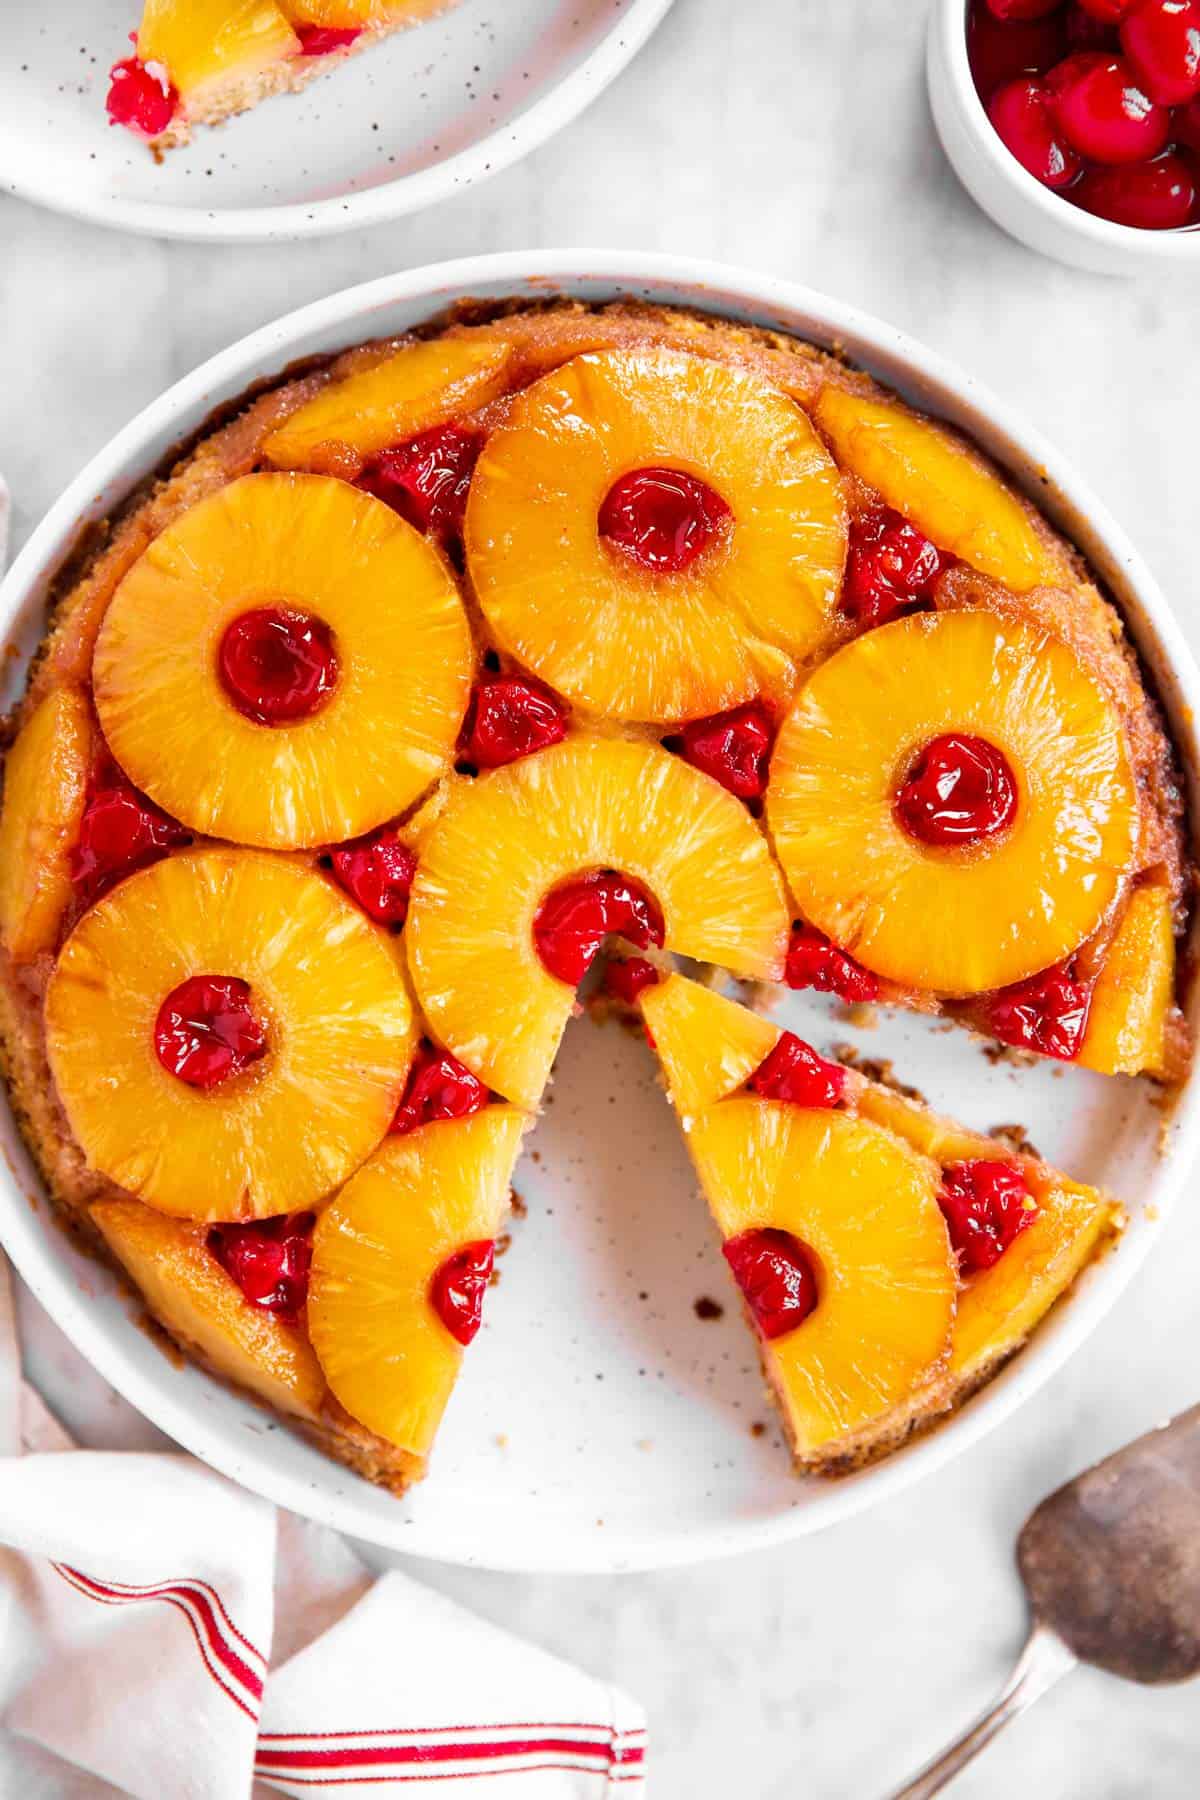 https://www.savorynothings.com/wp-content/uploads/2021/03/pineapple-upside-down-cake-image-6.jpg